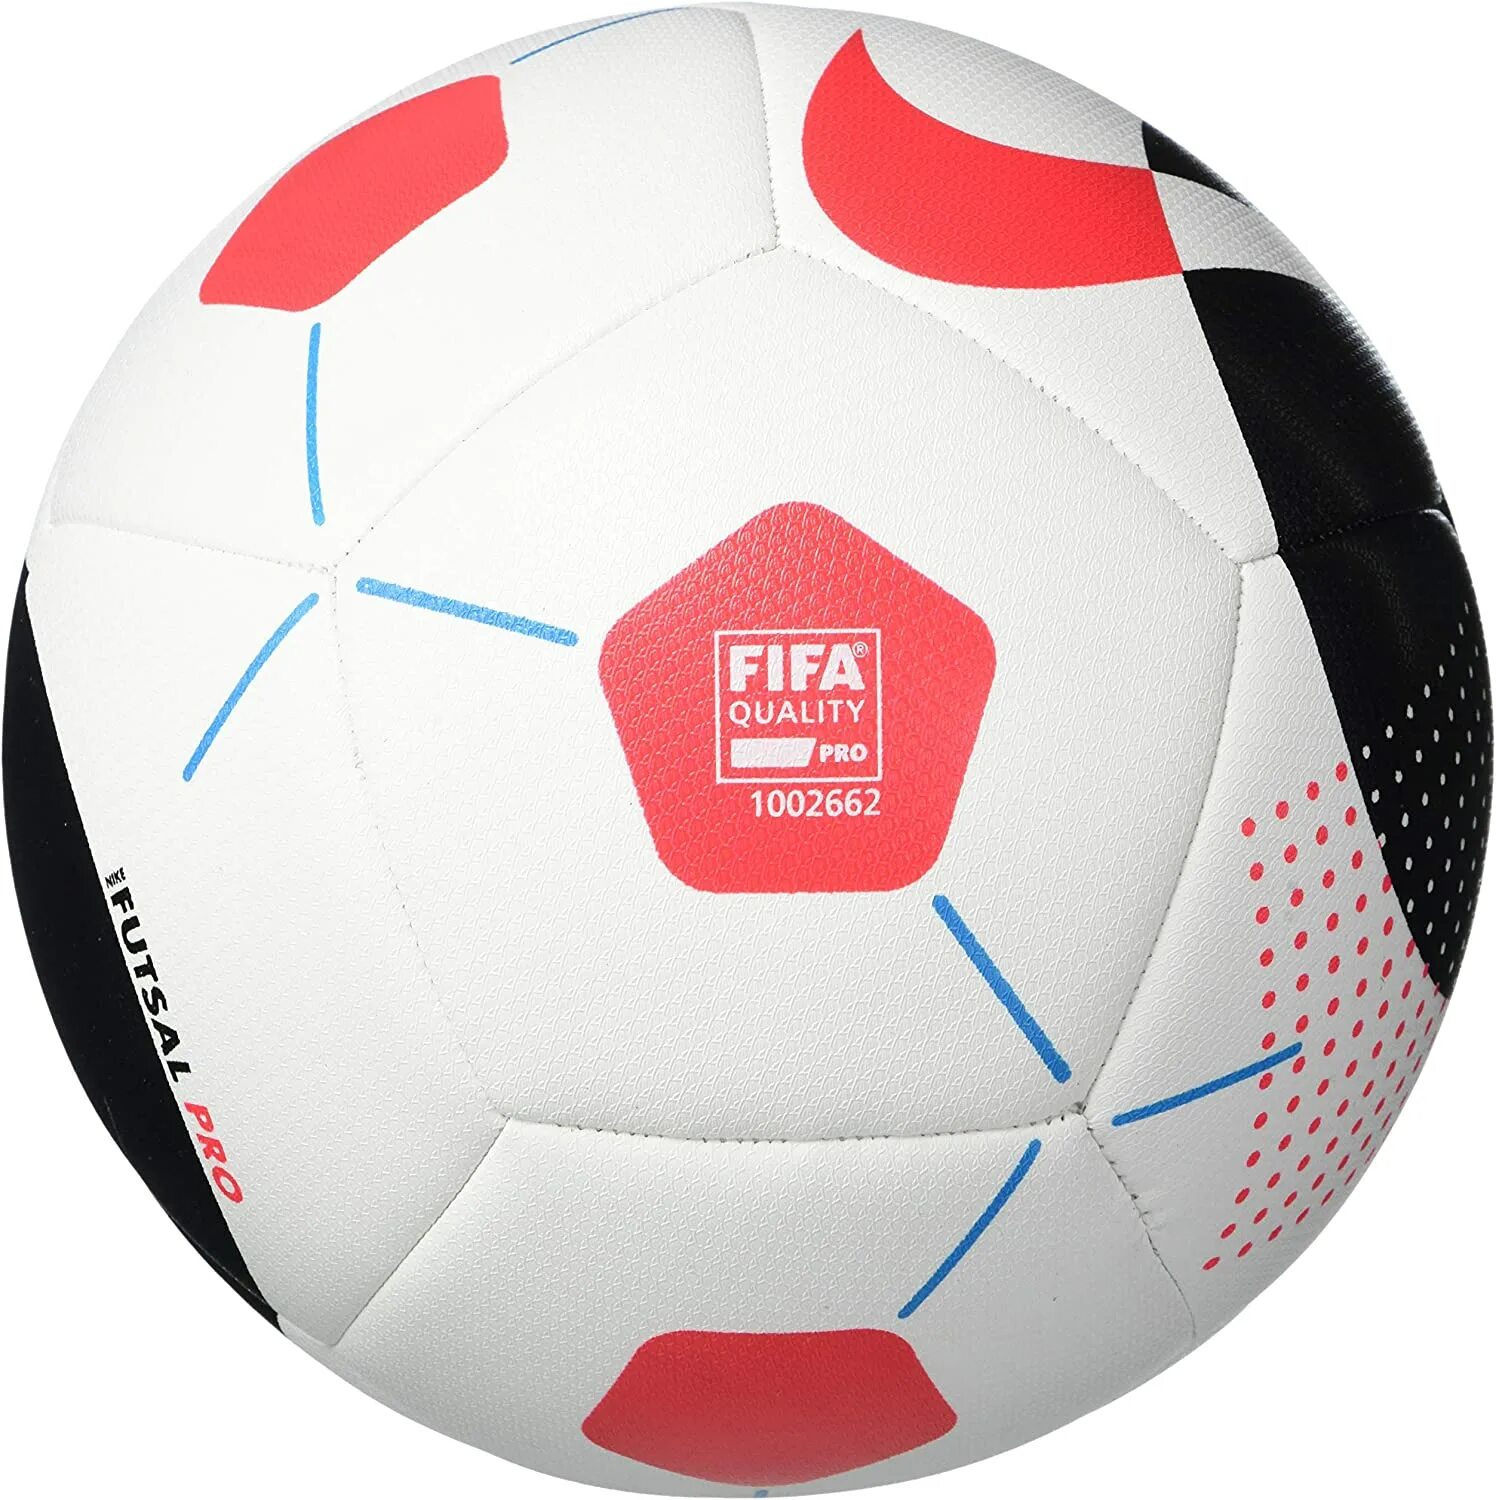 Мяч fifa quality pro. Мяч Nike FIFA quality Pro. Мяч футзальный найк 1002662. Футбольный мяч Nike Futsal Pro. Мяч Nike FIFA quality 2006-2007.